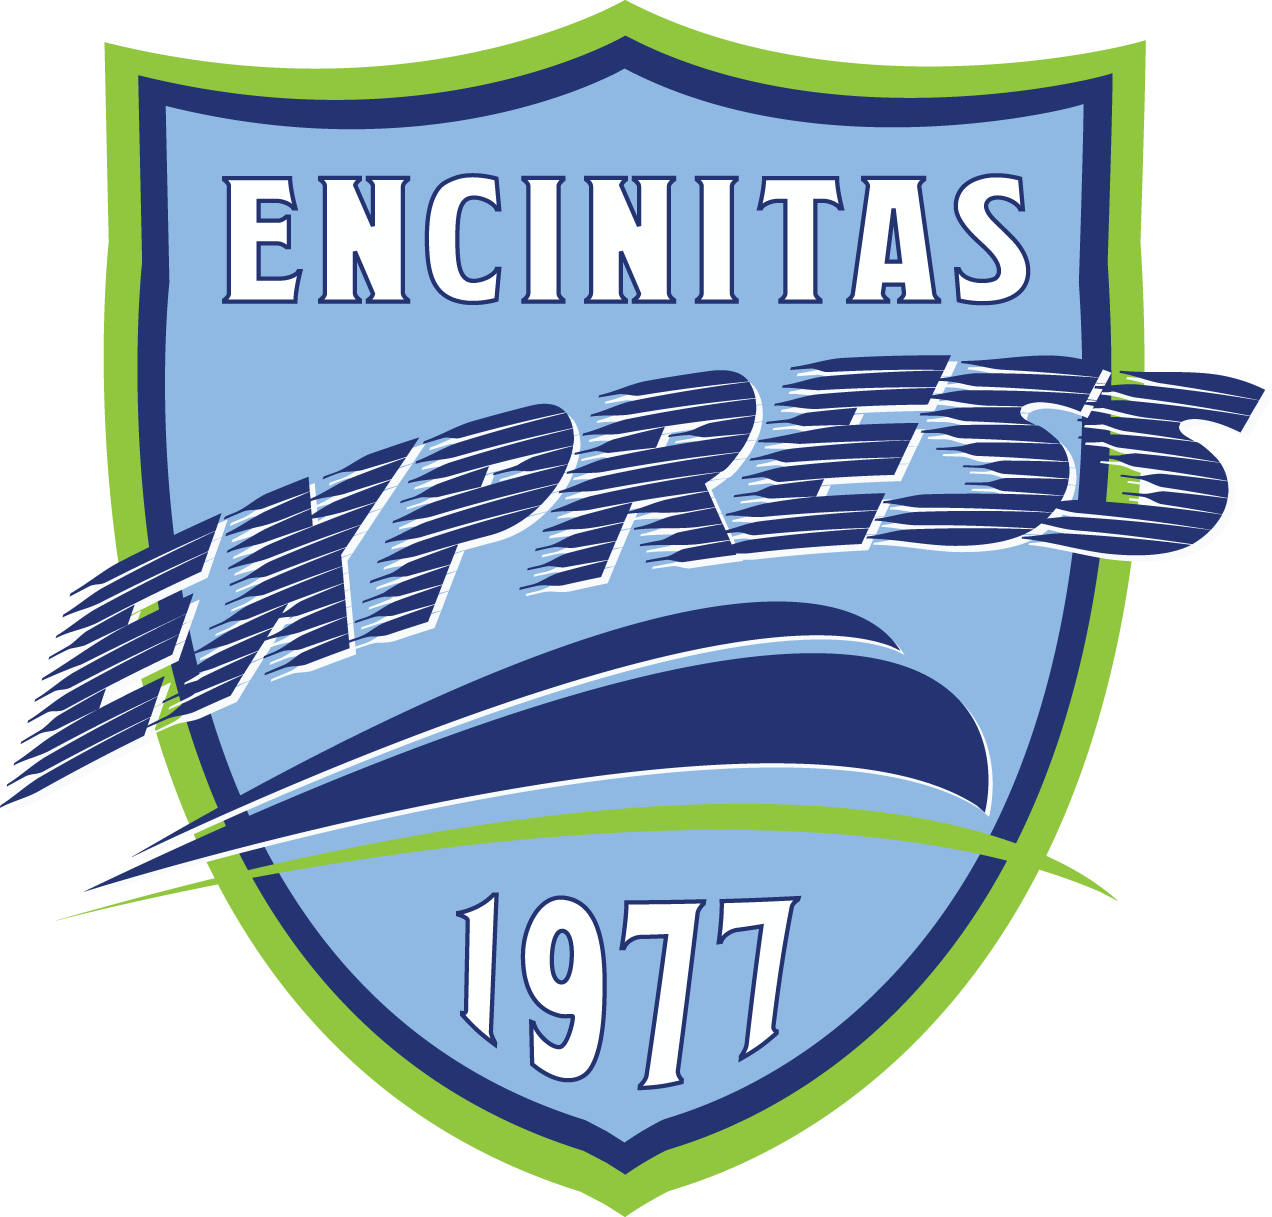 Encinitas Express team badge